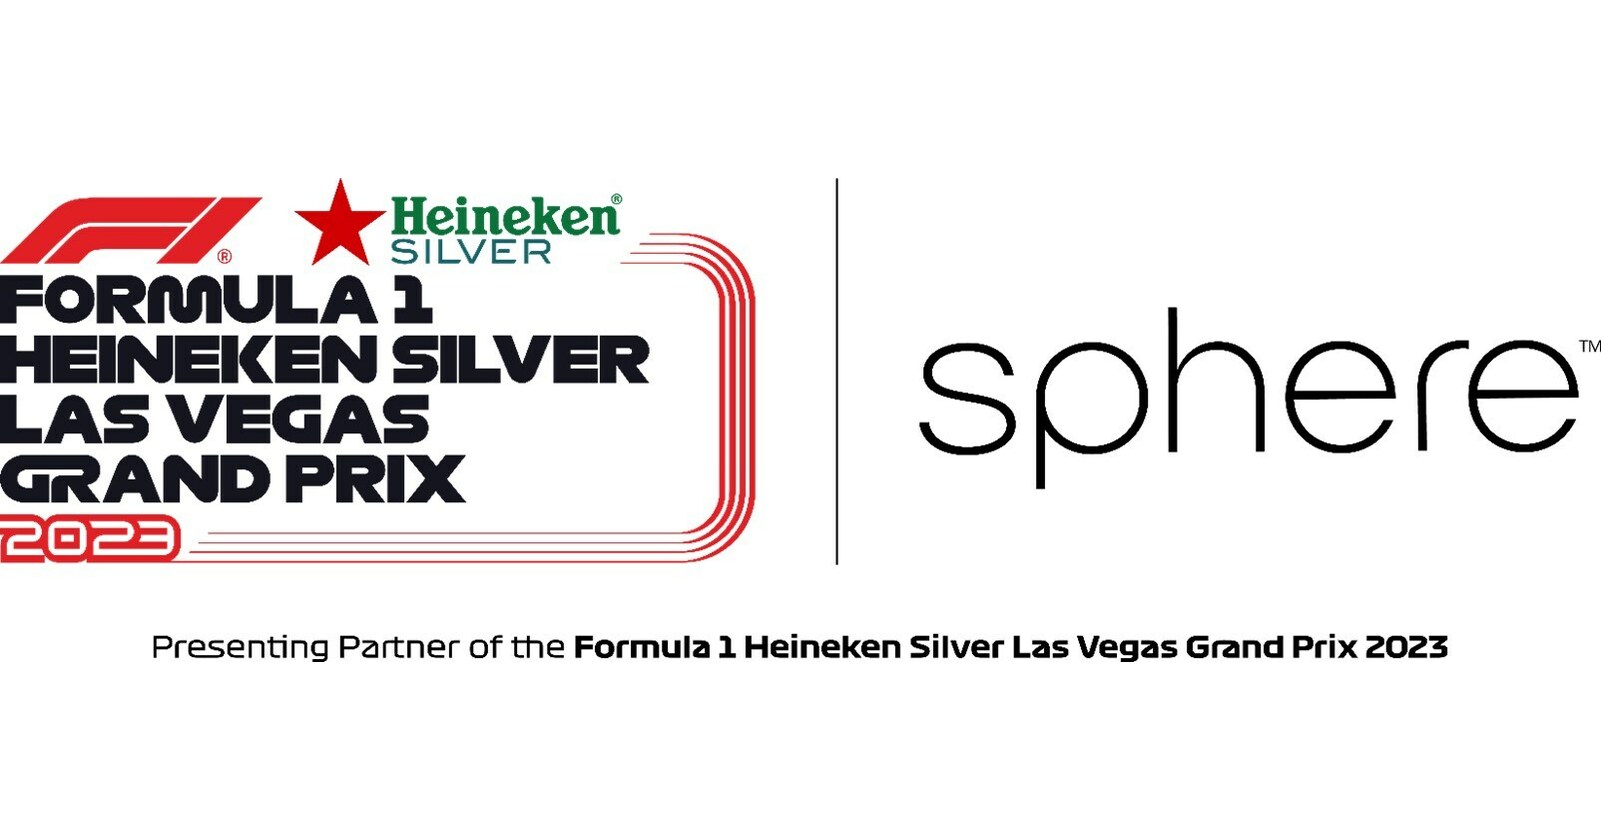 Sphere And Formula 1 Heineken Silver Las Vegas Grand Prix Announce